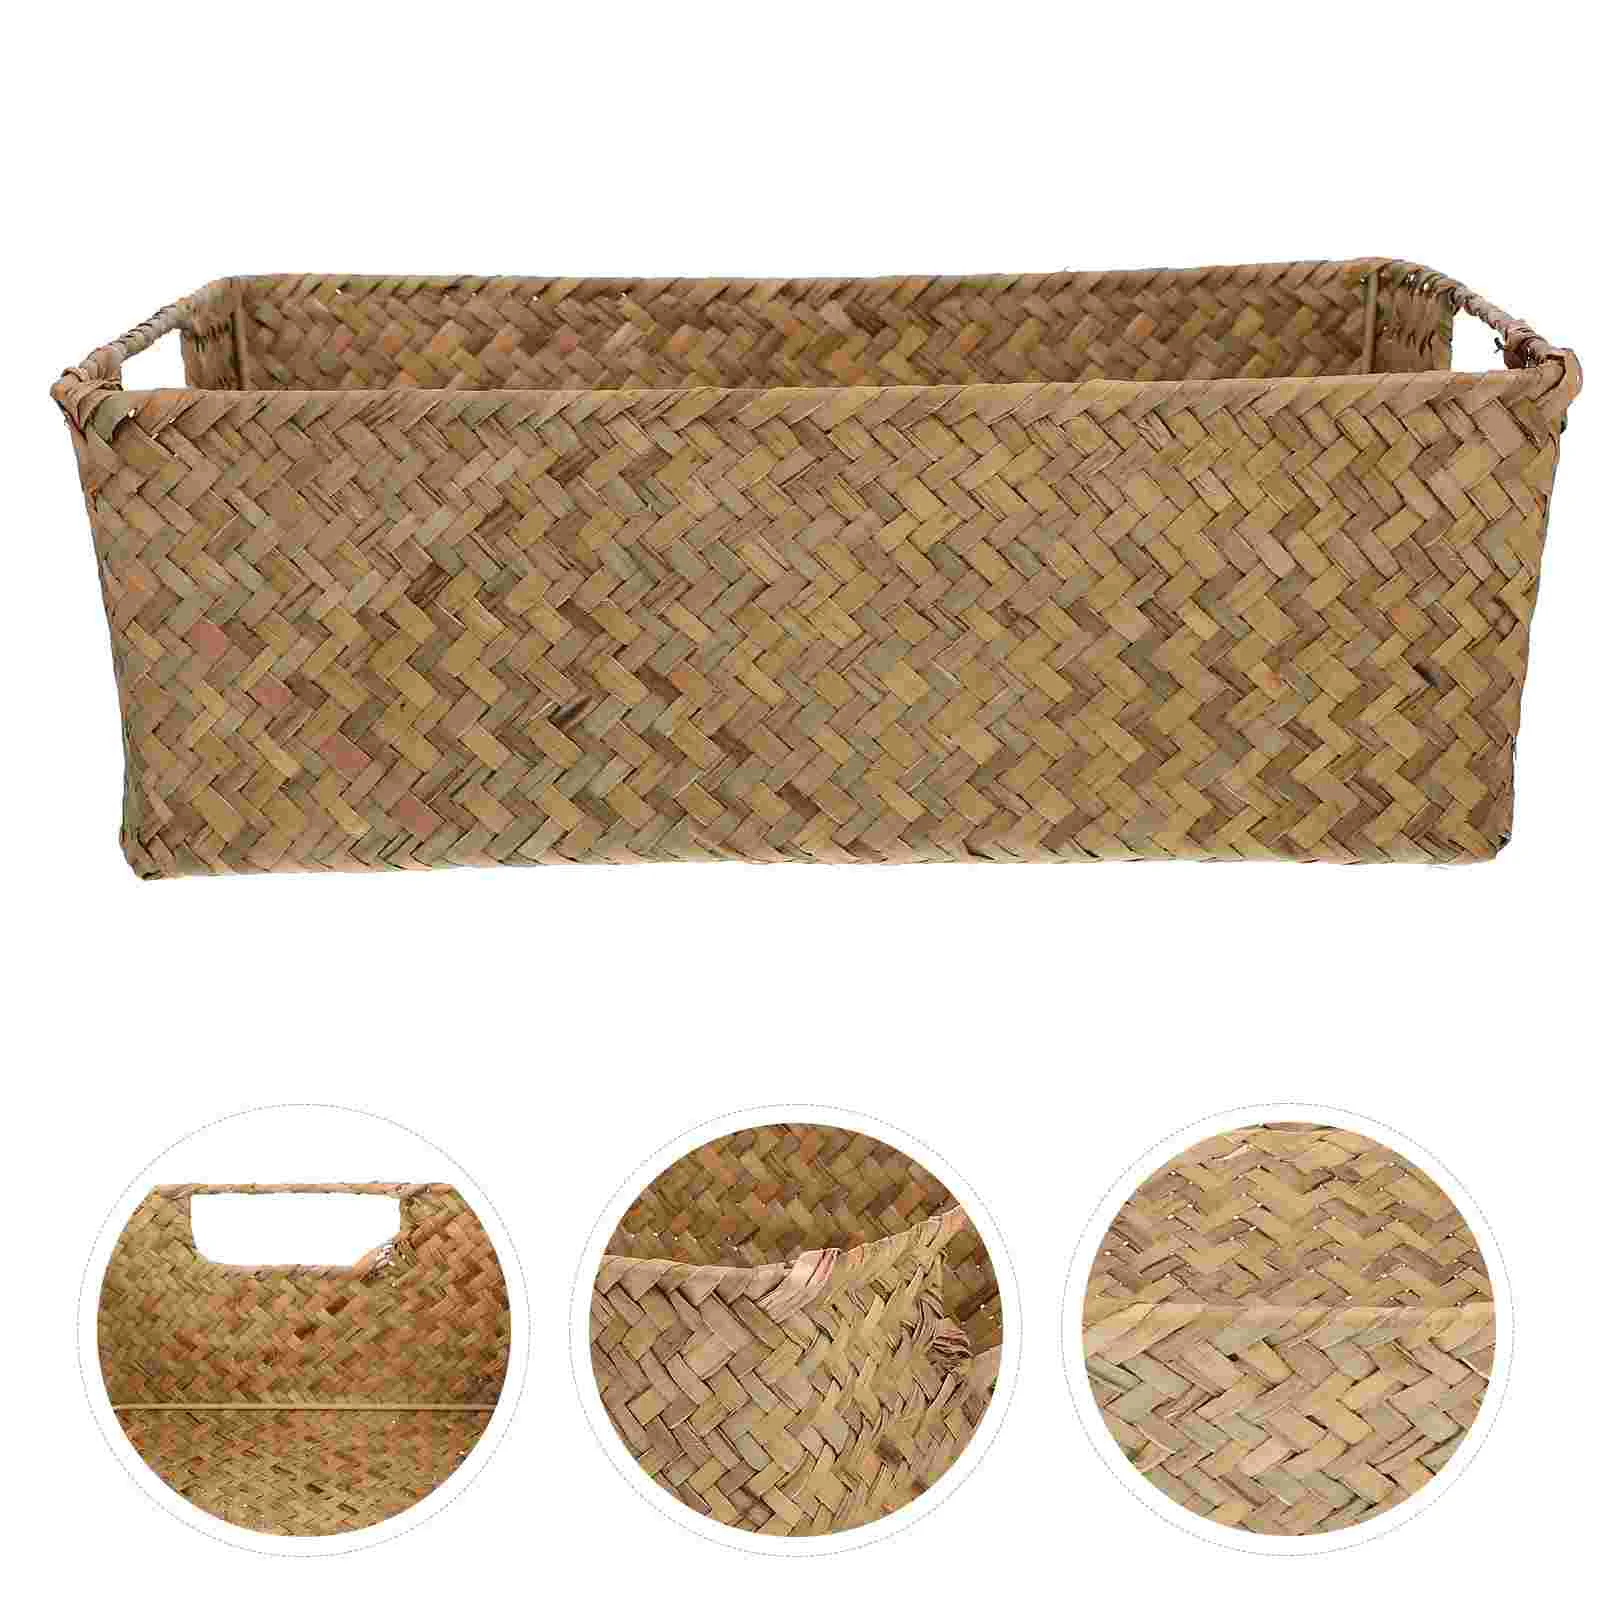 

Wicker Woven Bread Baskets Rectangular Fruit Baskets Tabletop Food Serving Basket Handmade Pantry Organizer Vegetables Breakfast